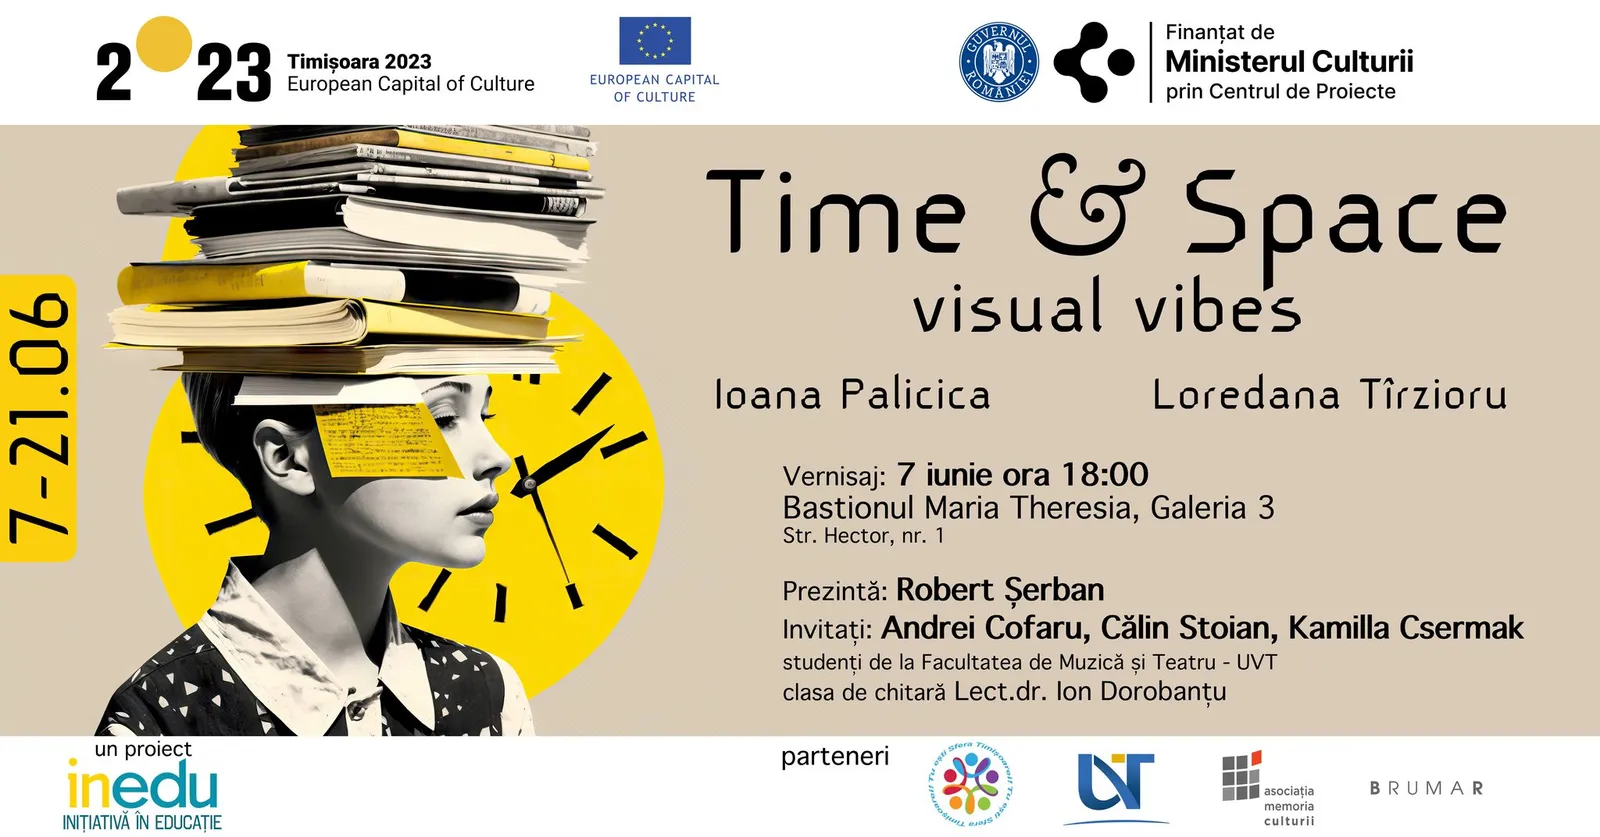 Time & Space - Visual vibes, Ioana Palicica și Loredana Tîrzioru